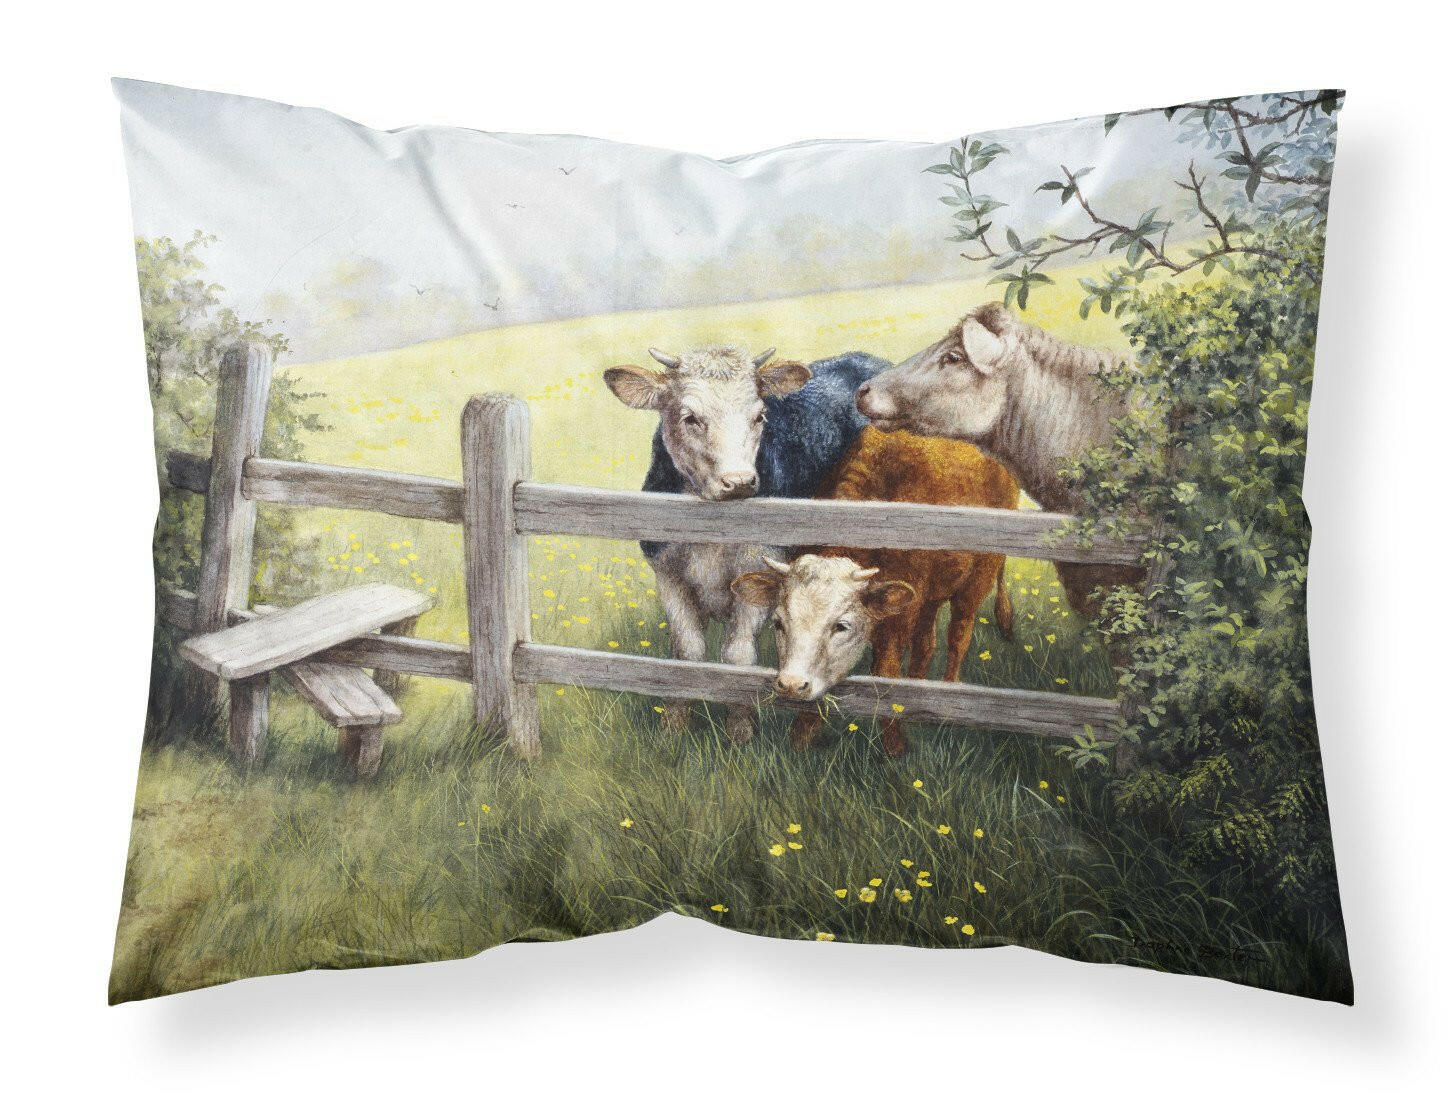 Cows in a Buttercup Meadow Fabric Standard Pillowcase BDBA0103PILLOWCASE by Caroline's Treasures